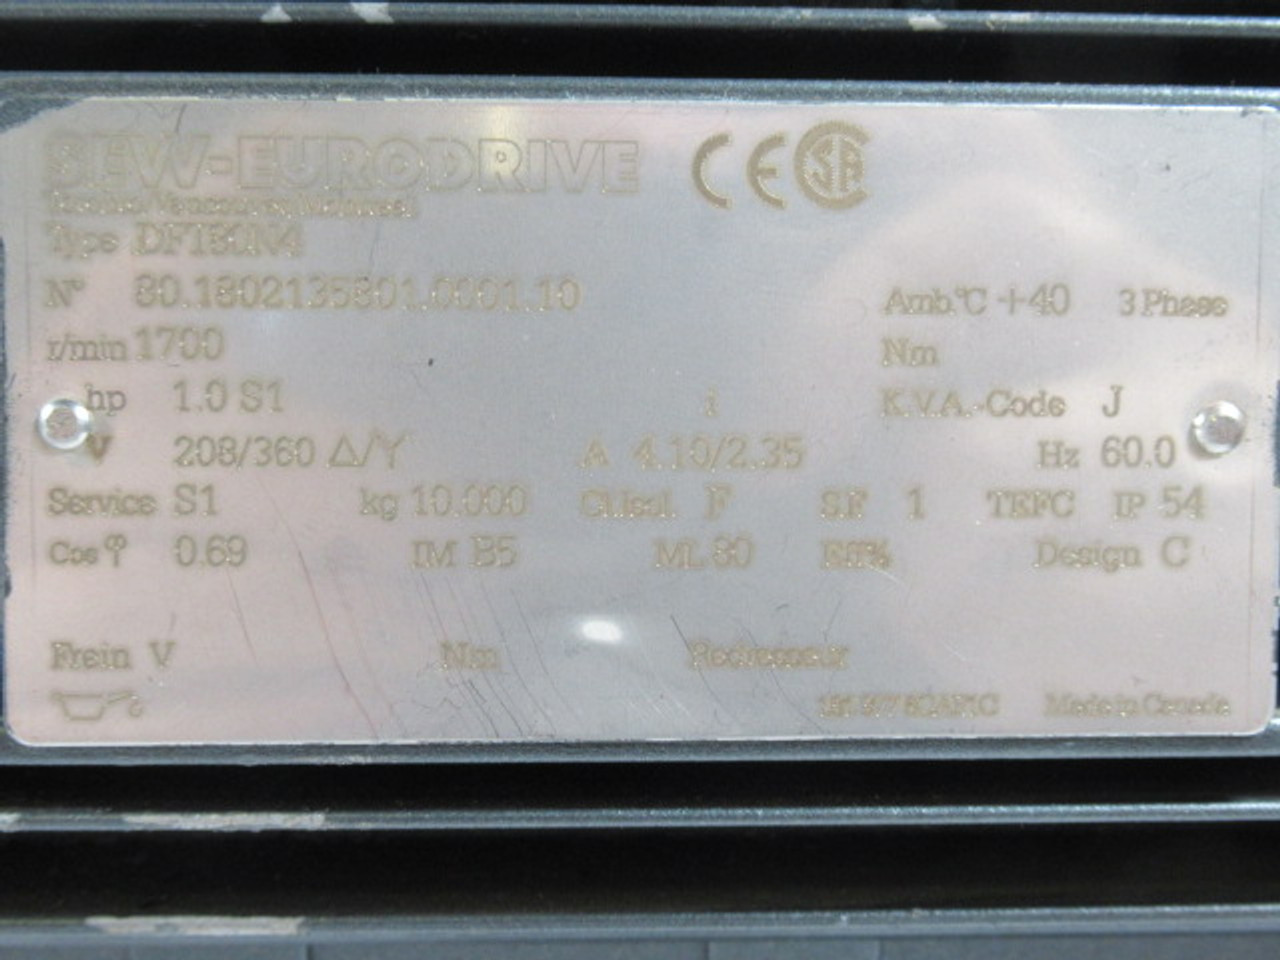 Sew-Eurodrive 1.0HP 1700RPM 208/360V TEFC 3Ph C/W Gear Reducer 123.54:1 ! NOP !